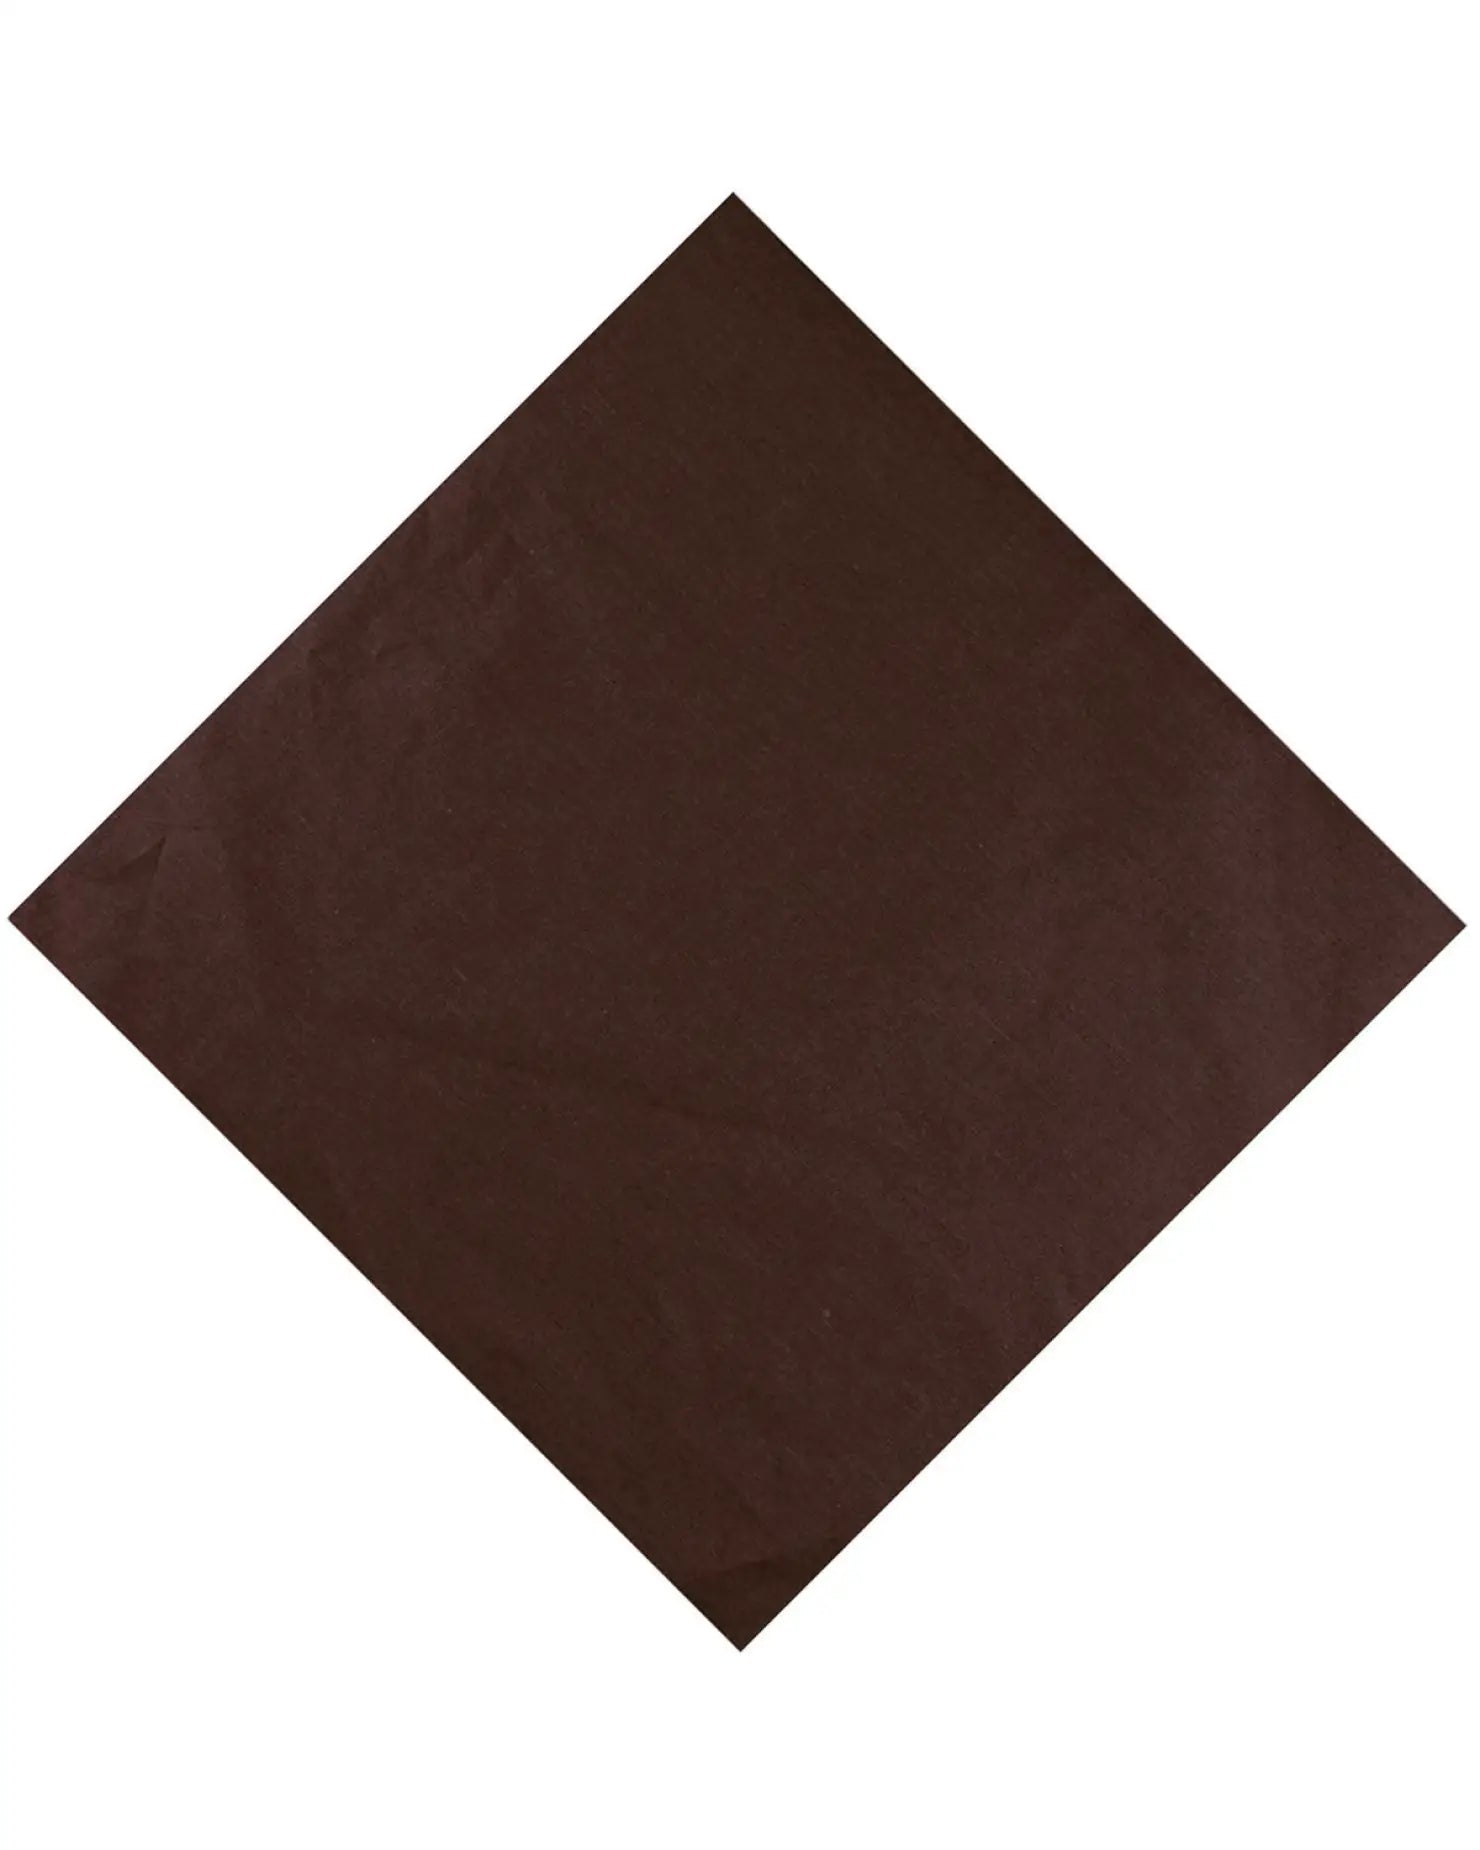 Brown cotton square bandana napkin on white background